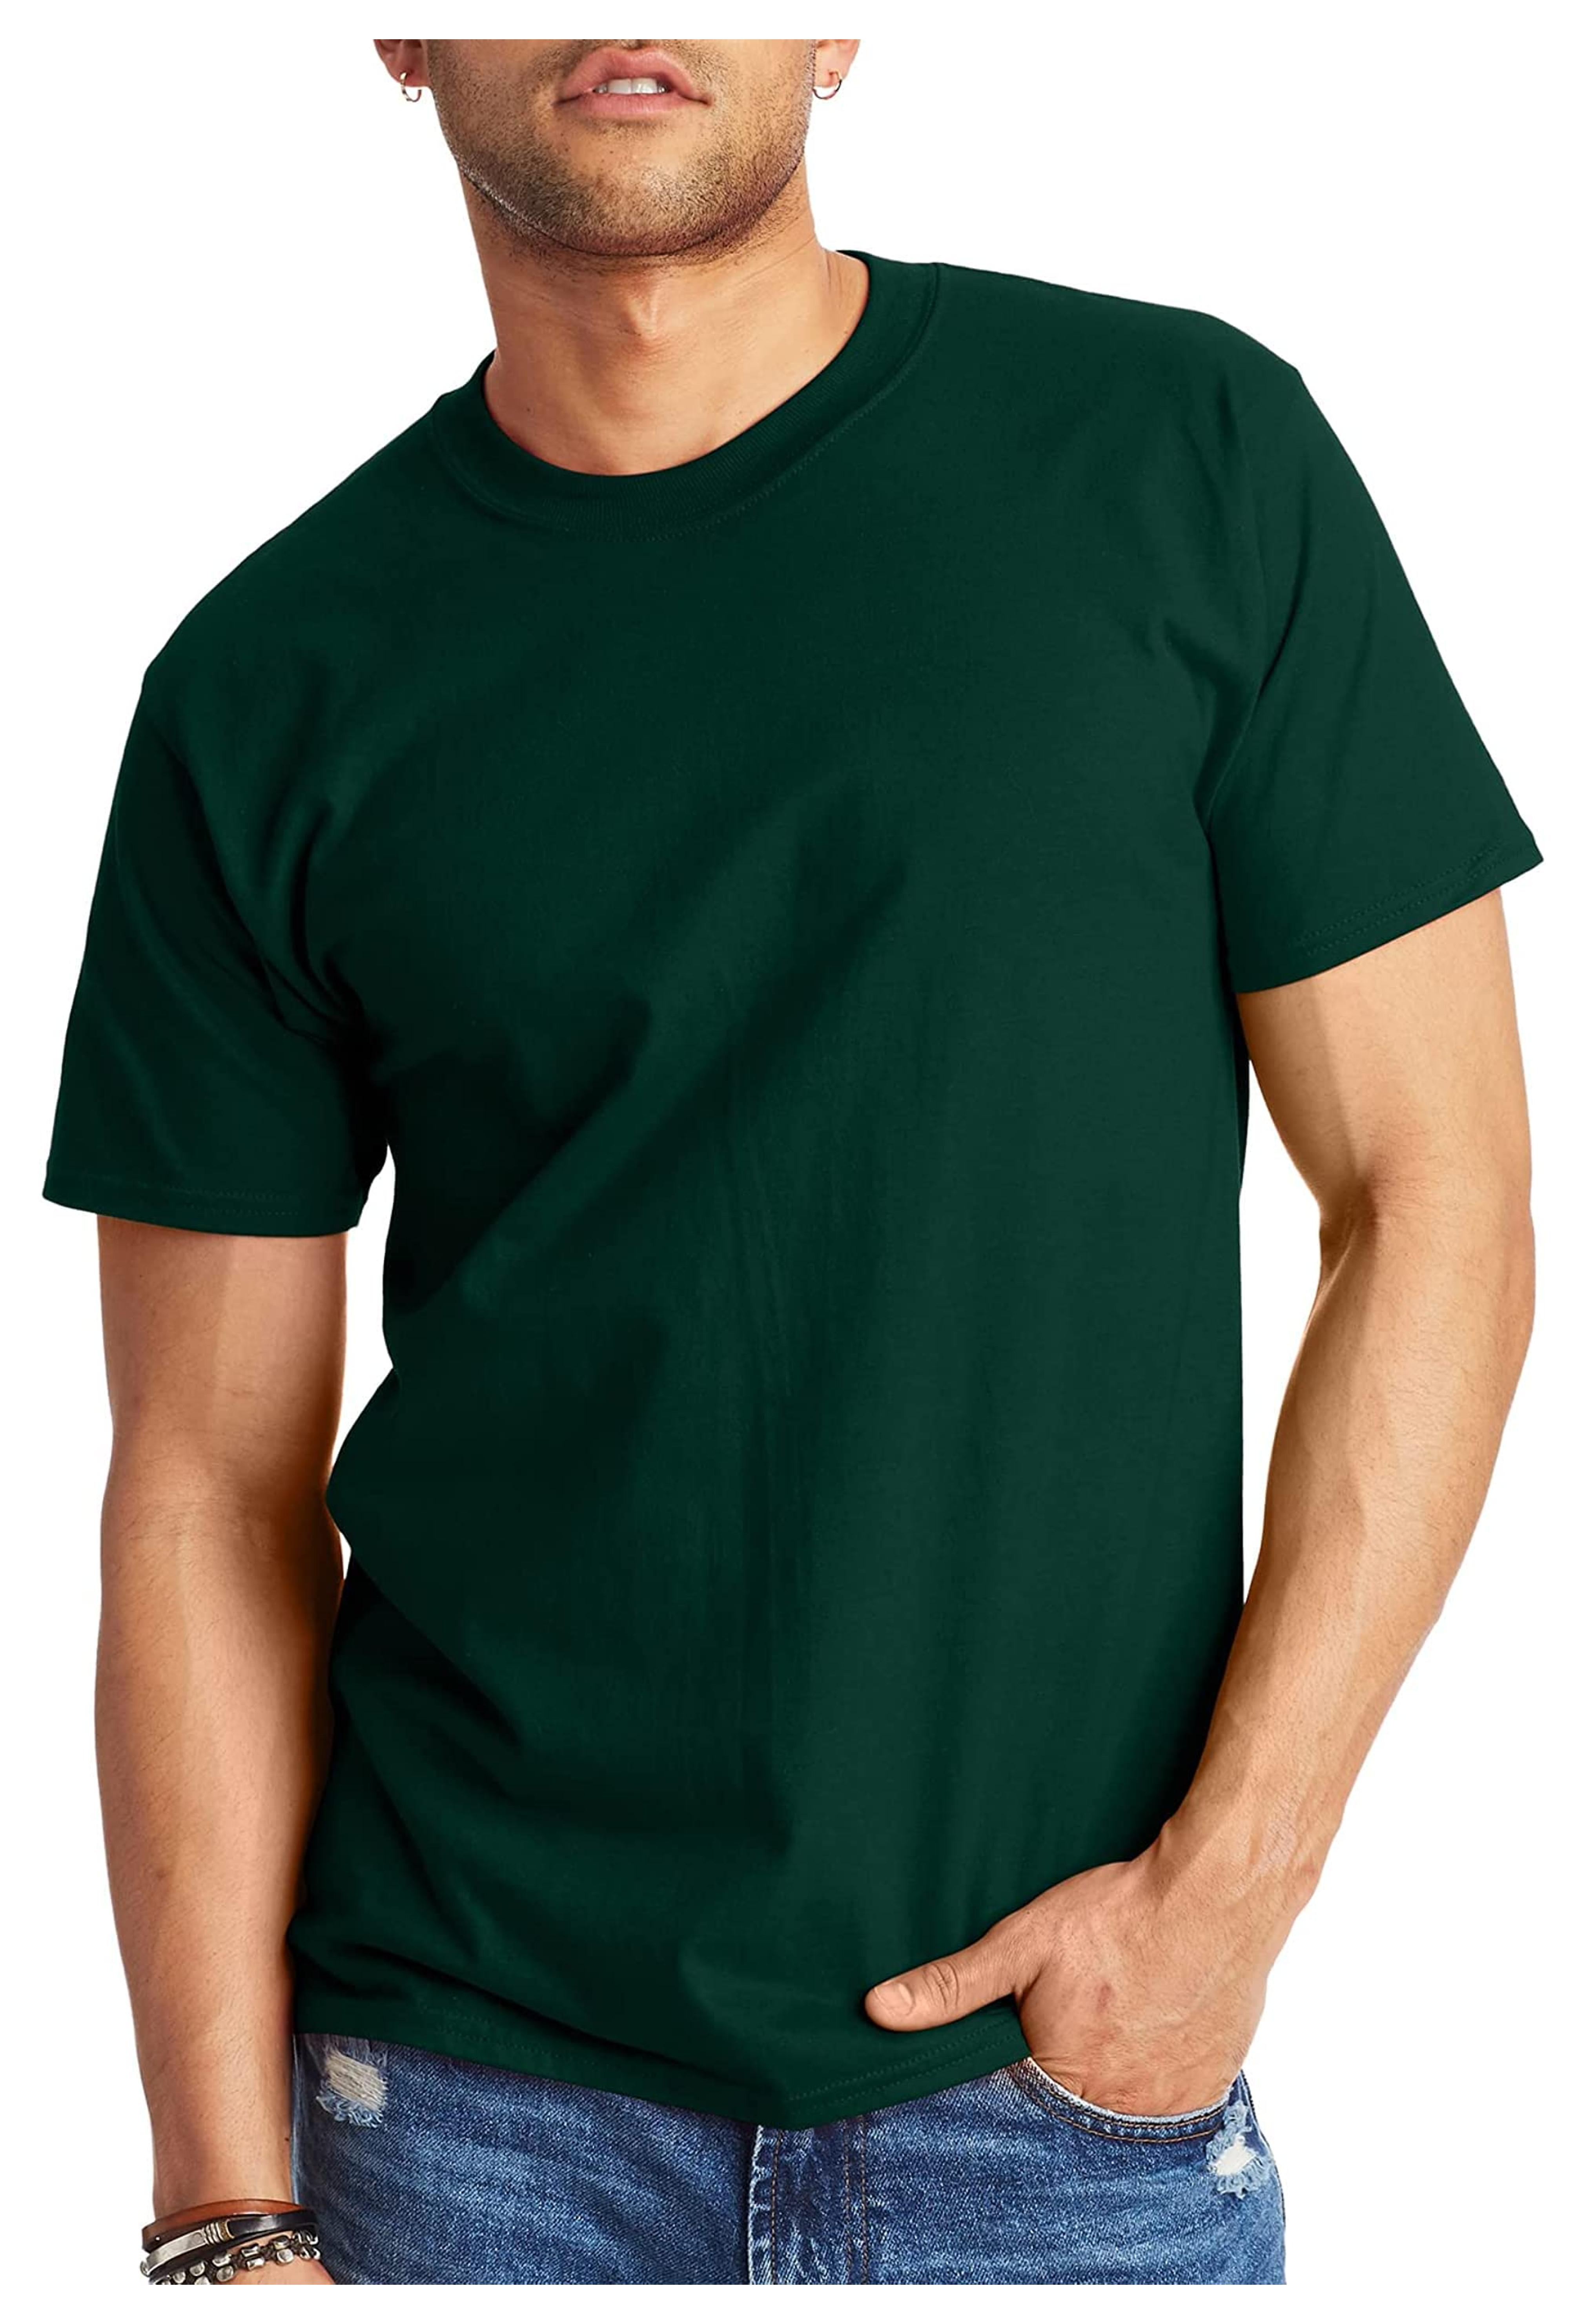 Hanes mens Beefy Heavyweight Short Sleeve T-shirt (1-pack) fashion t shirts, Deep Forest, Medium US | Amazon.com